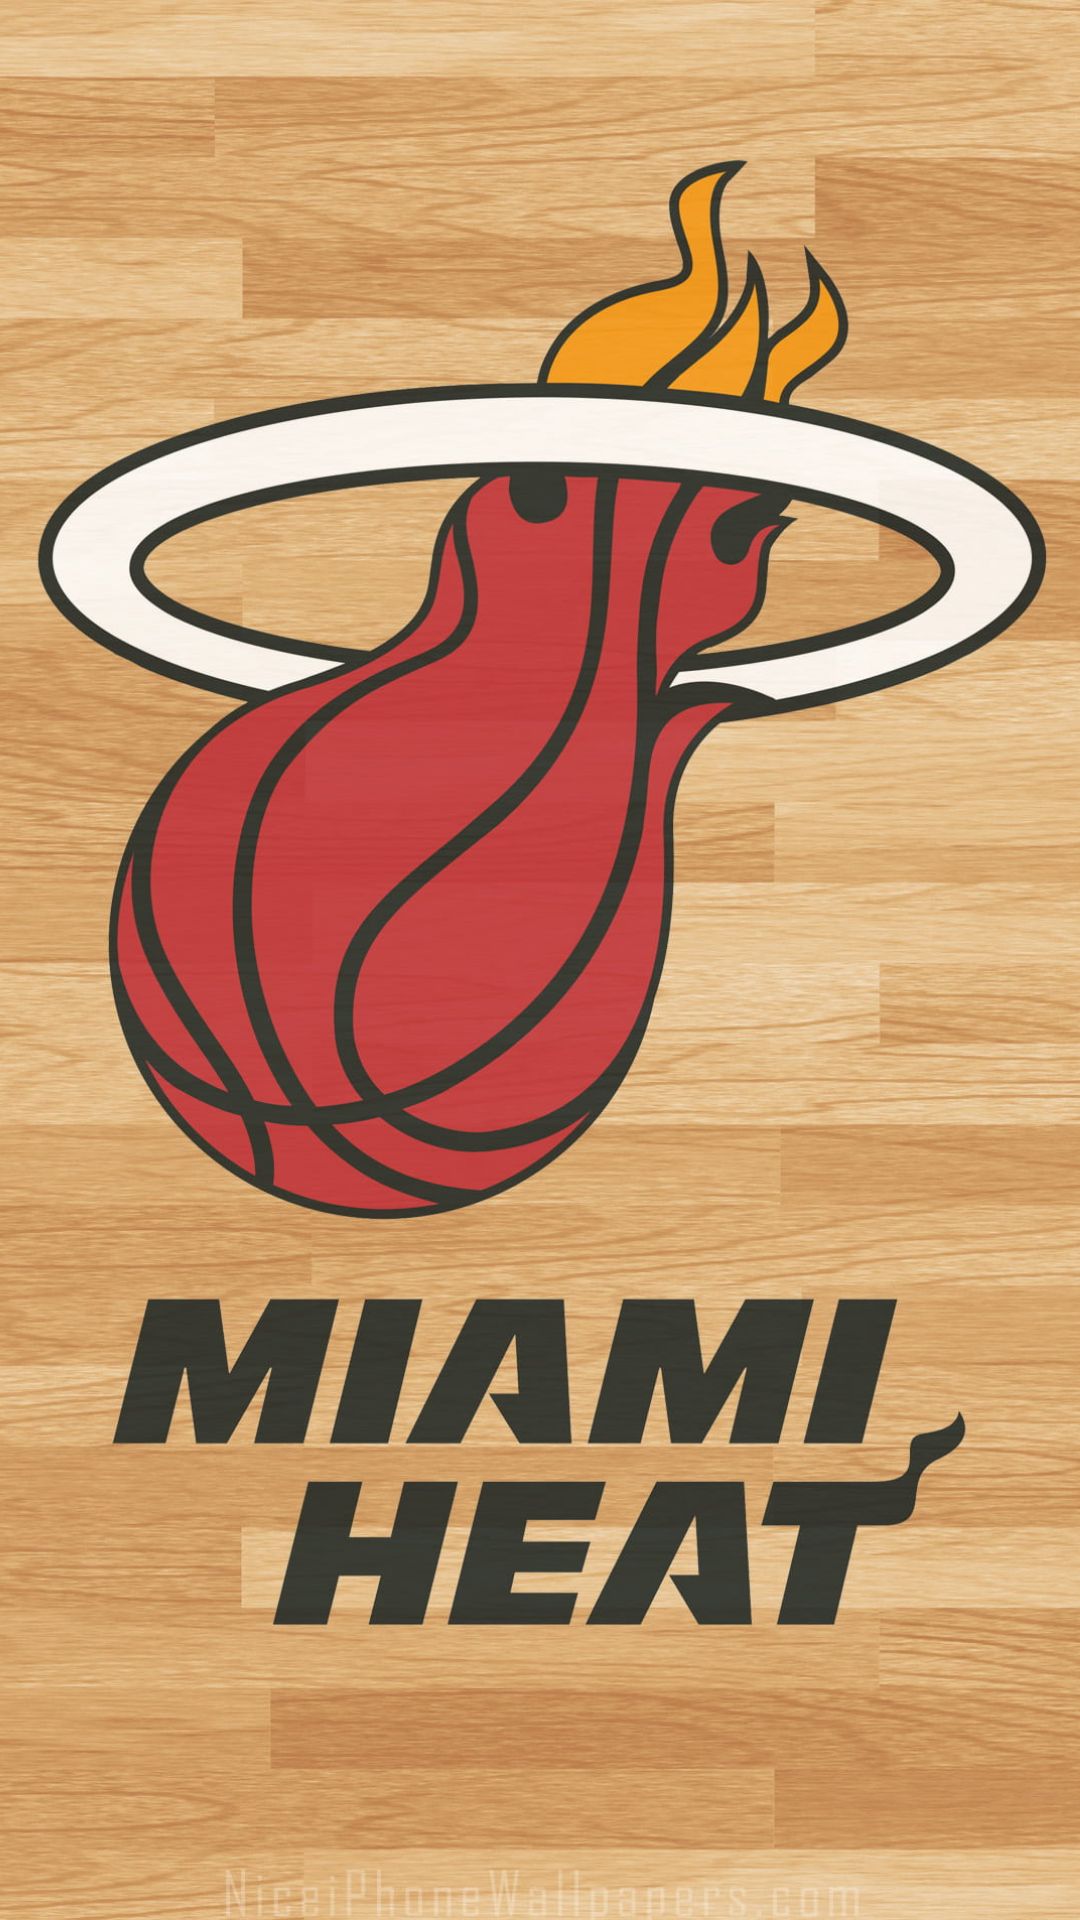 Miami Heat Picture For Wallpaper. Click & Visit To Download Miami Heat Picture For Wallpaper